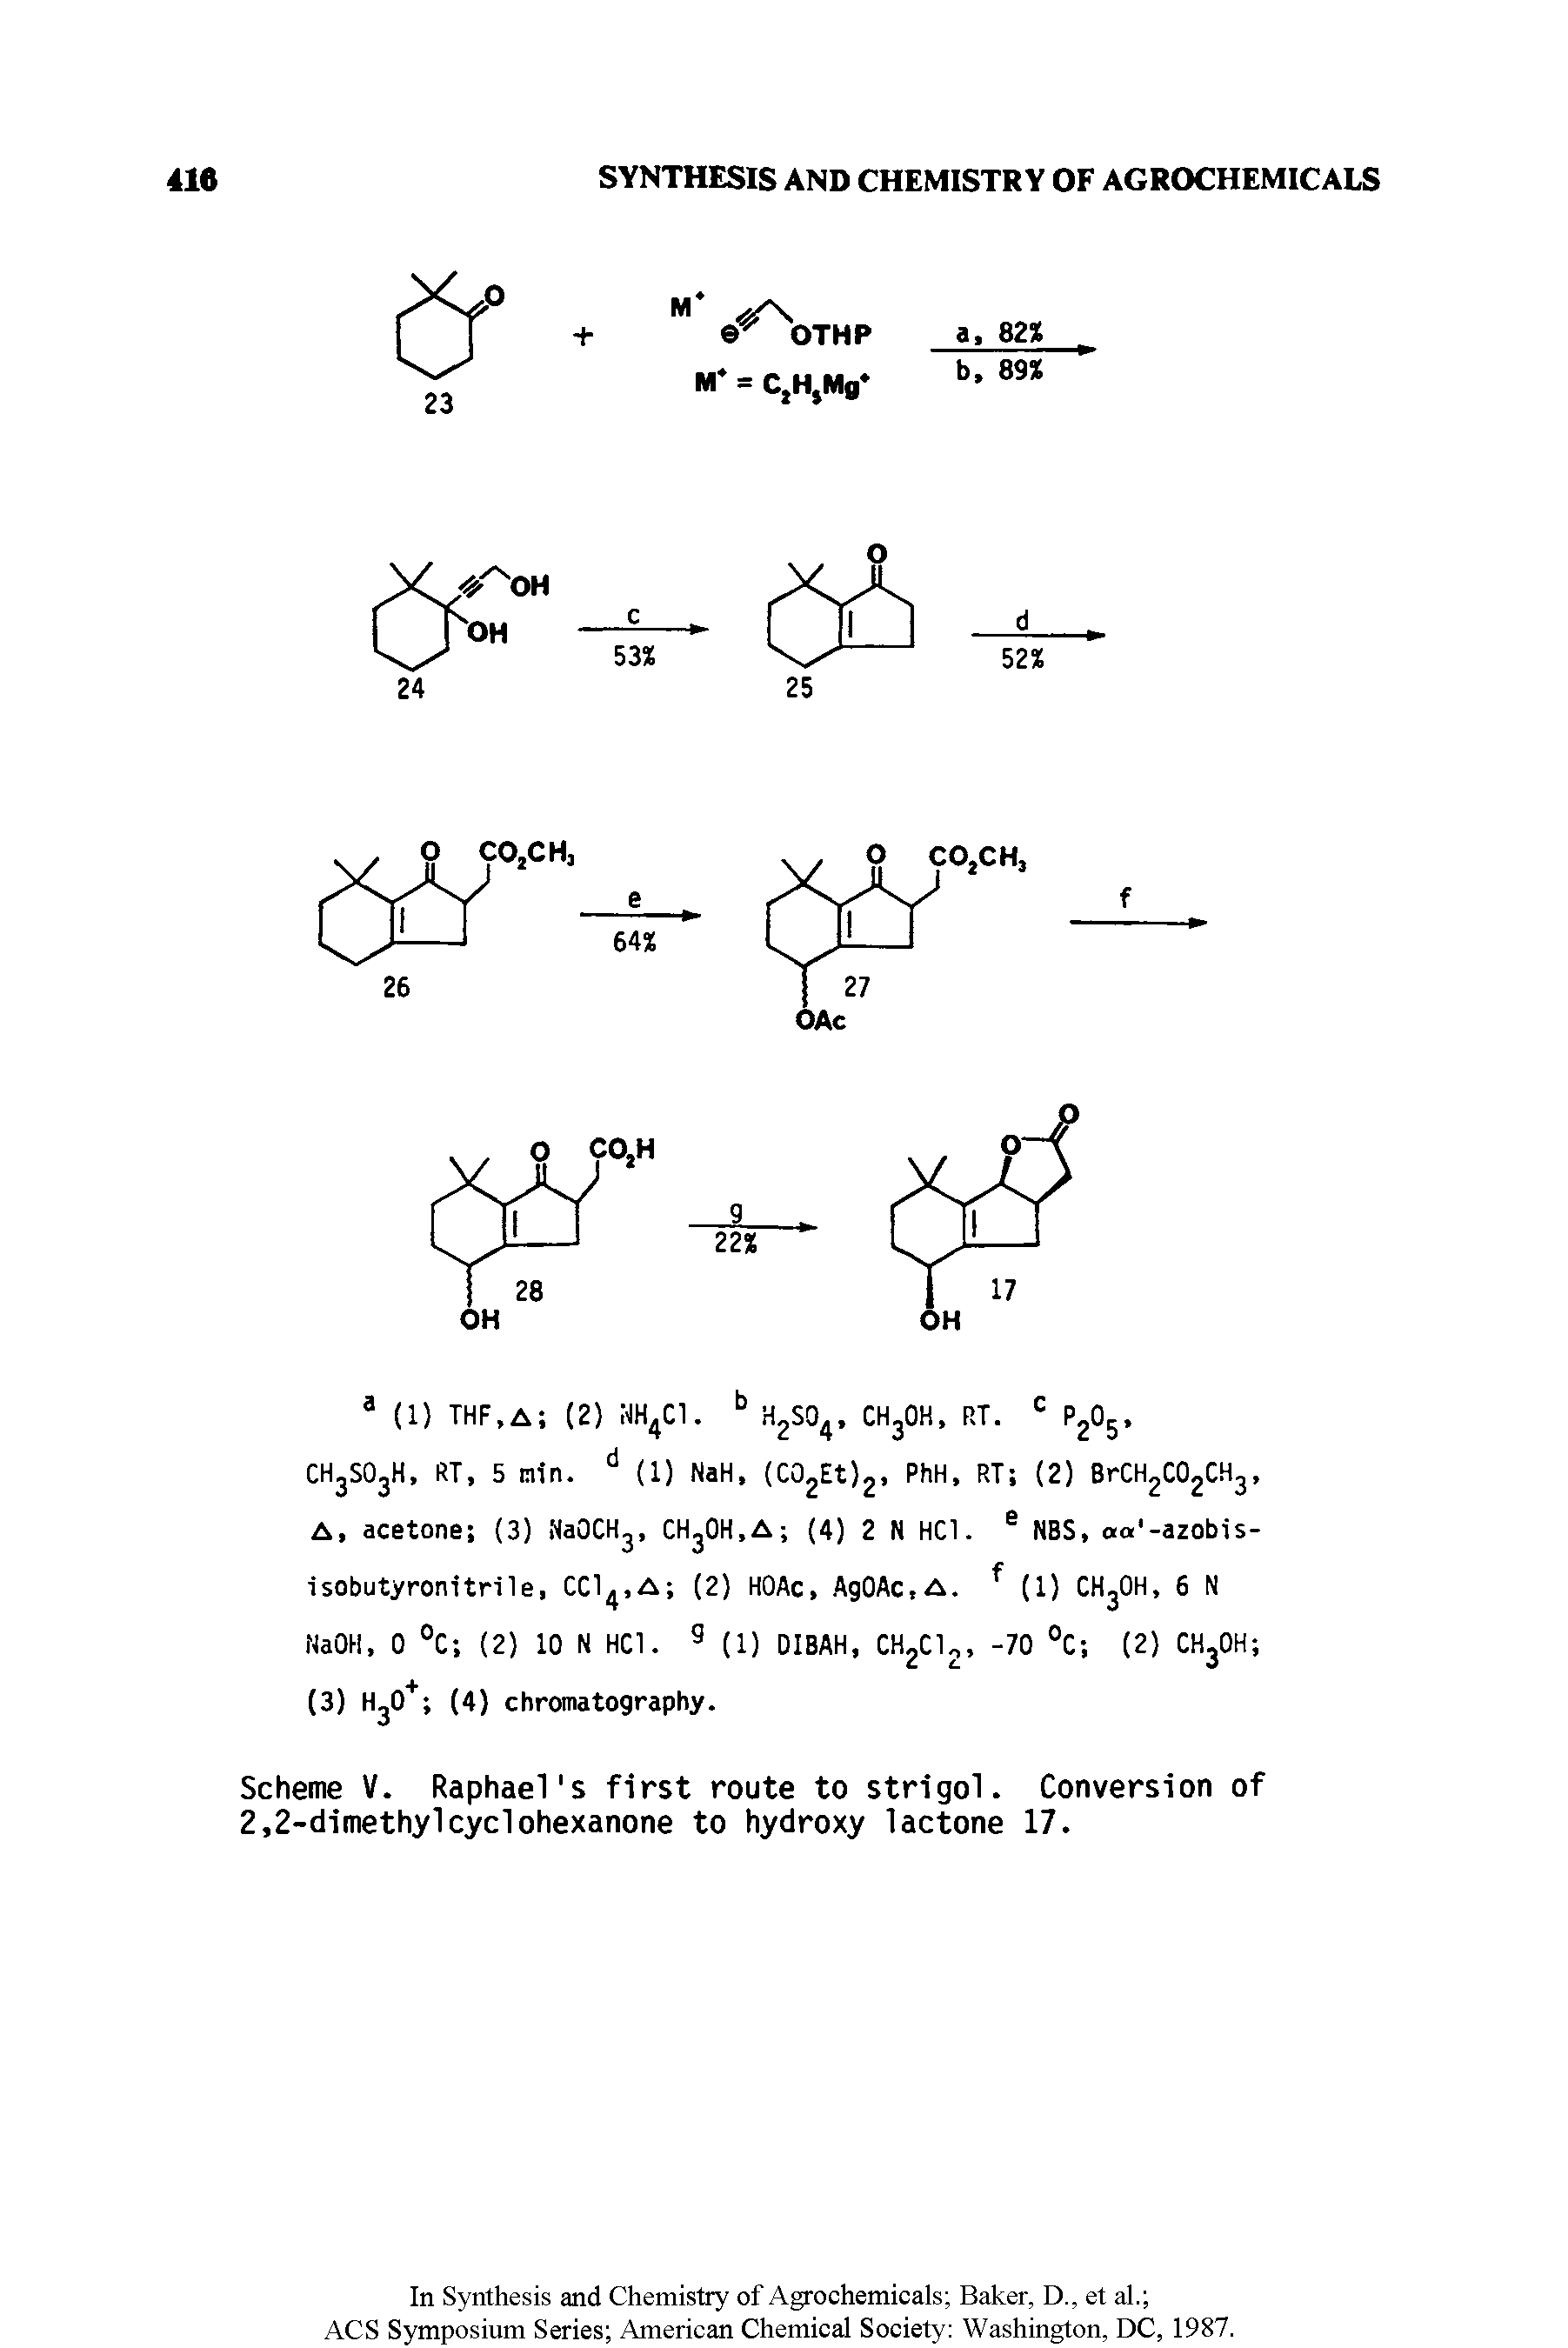 Scheme V. Raphael s first route to strigol. Conversion of 2,2-dimethyl cyclohexanone to hydroxy lactone 17.